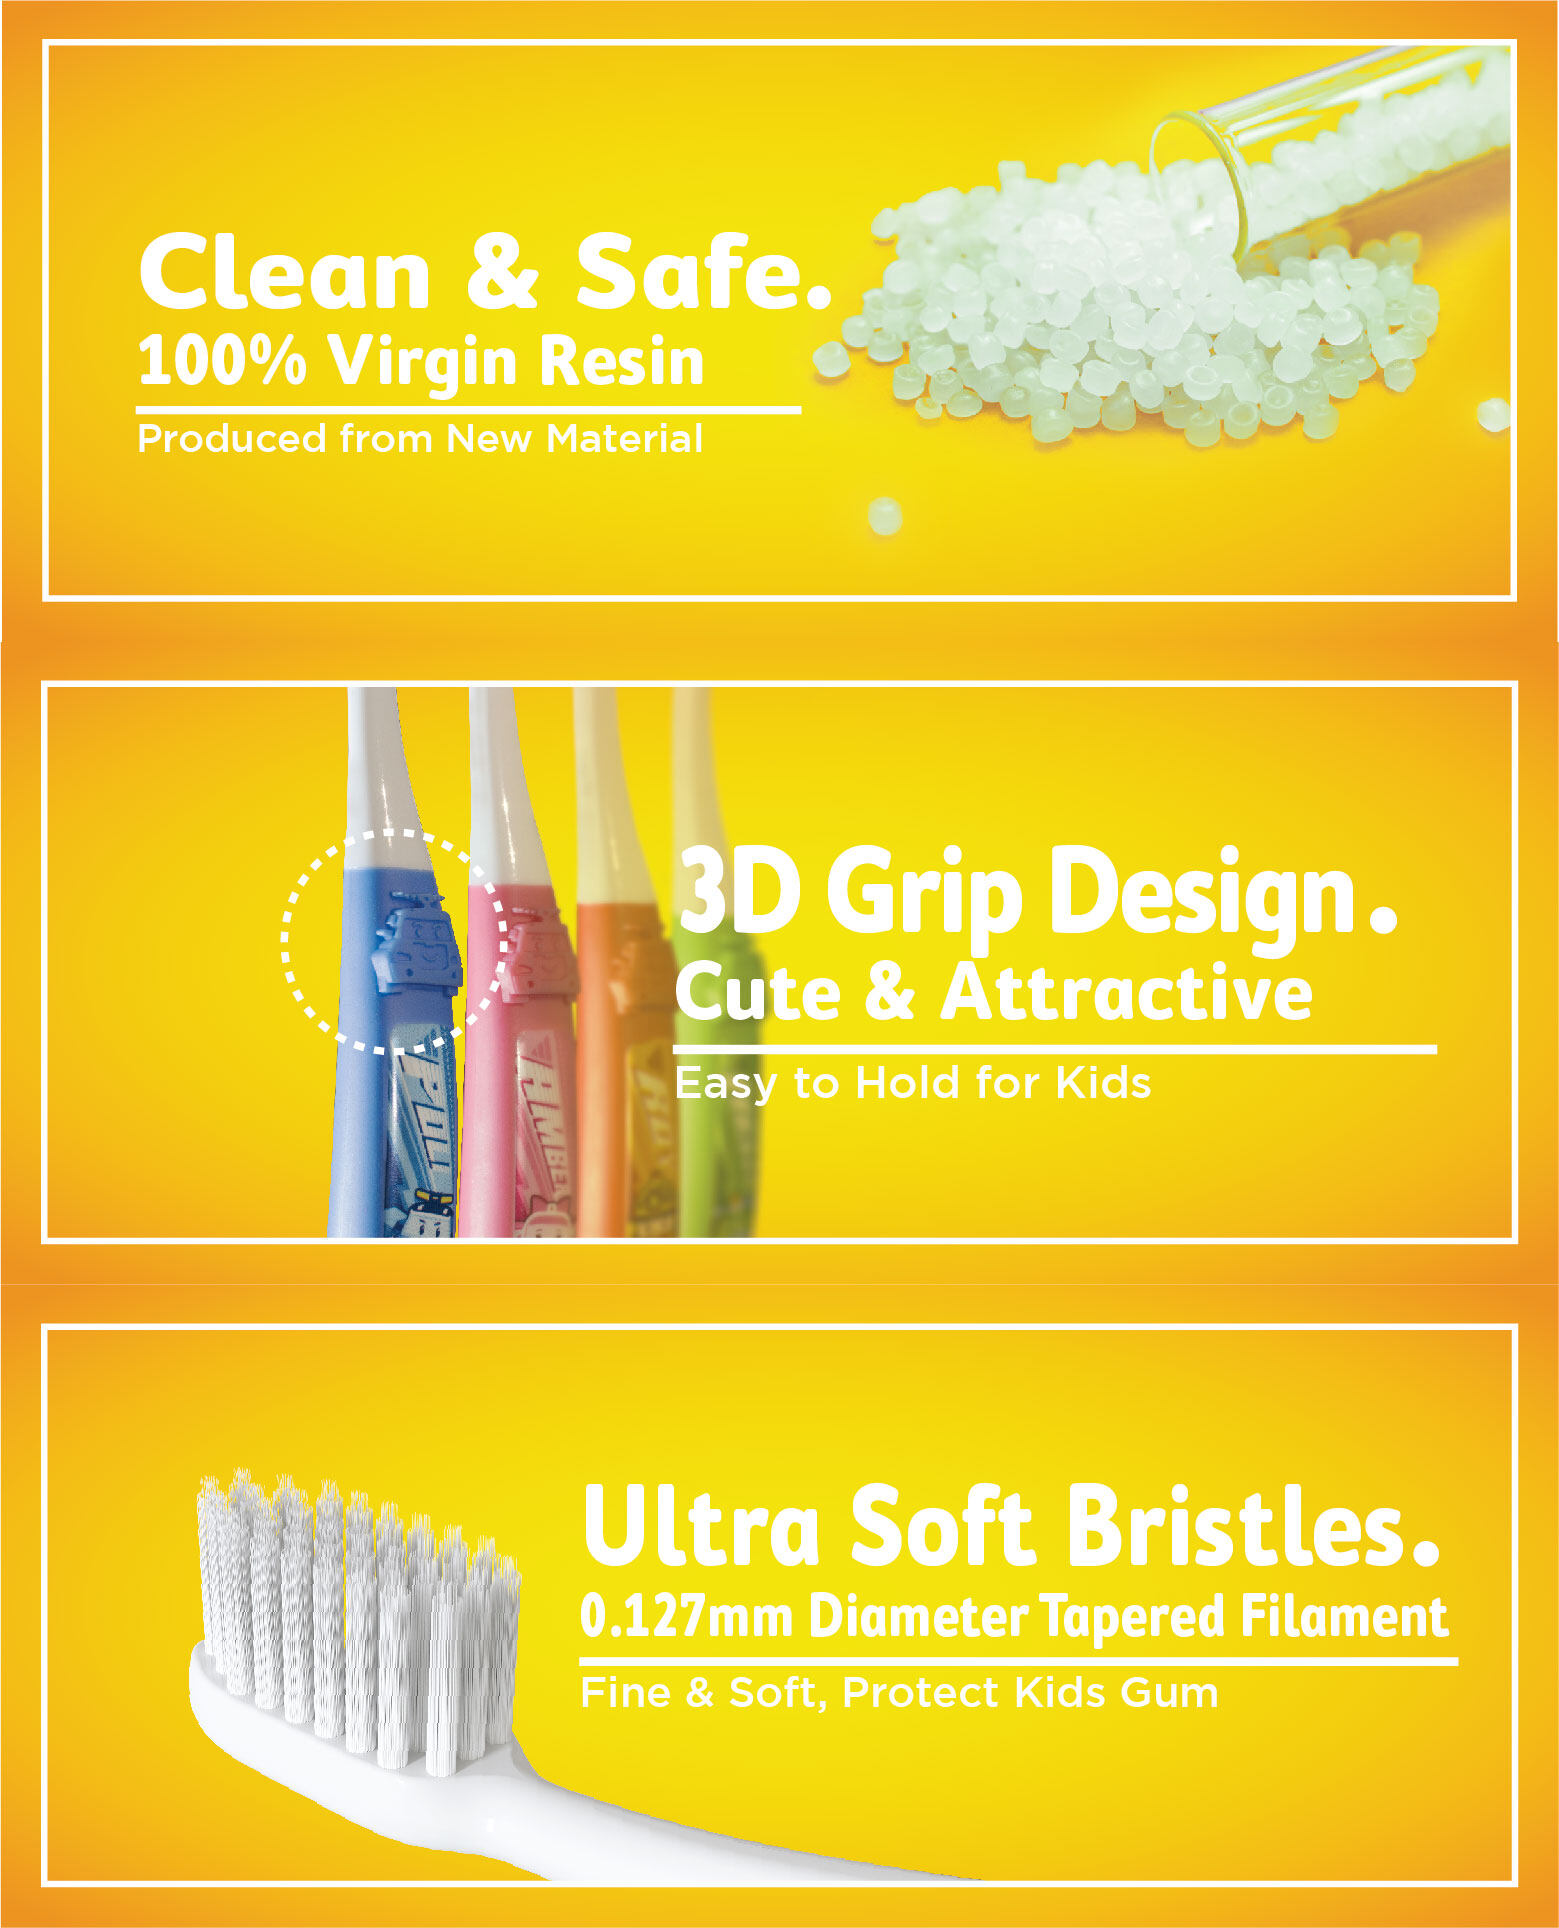 FAFC Robocar Amber Toothbrush Hook Bundle Set 2  (1 Amber Hook Toothbrush + 1 Helly Toothbrush + 2 Cup)